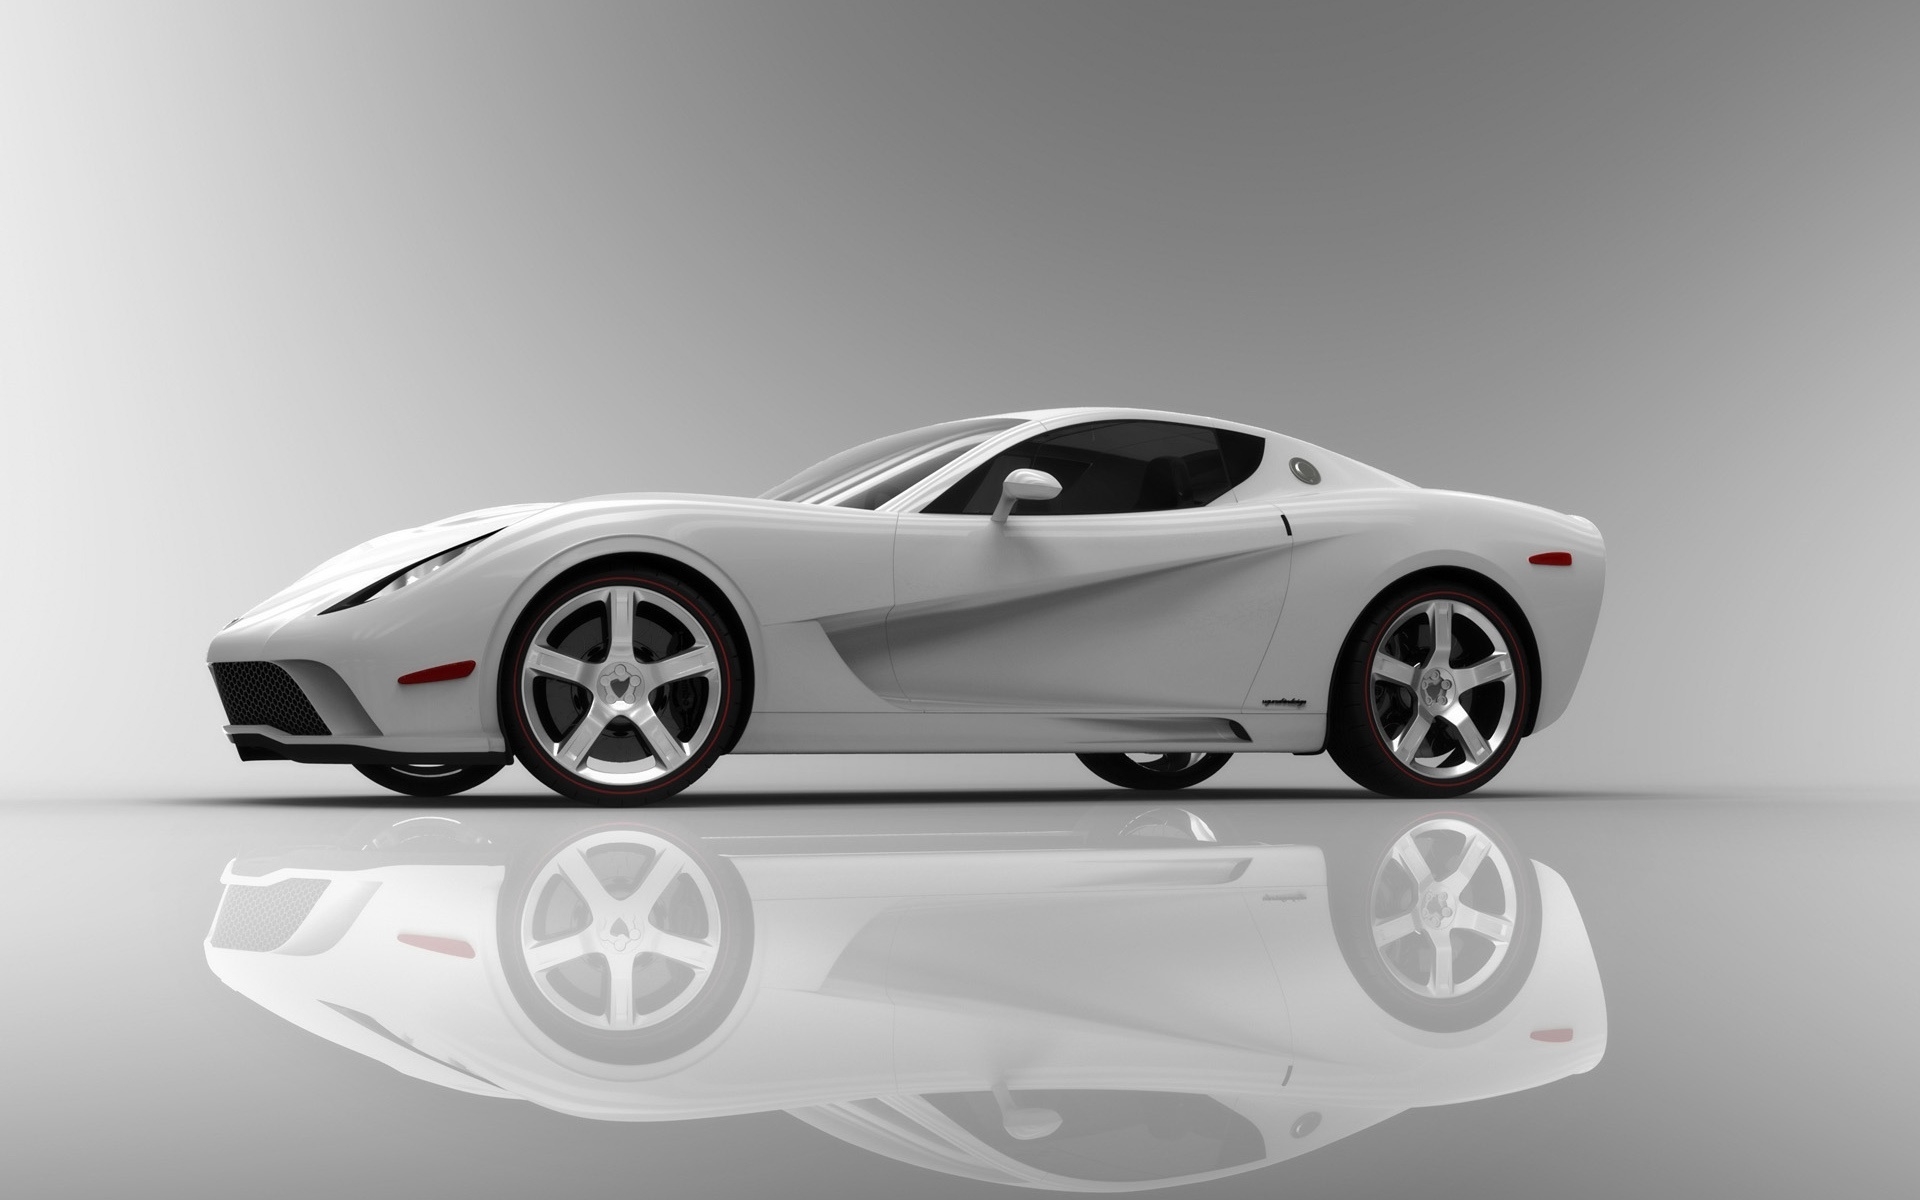 Corvette Z03 2009 White Side Angle for 1920 x 1200 widescreen resolution